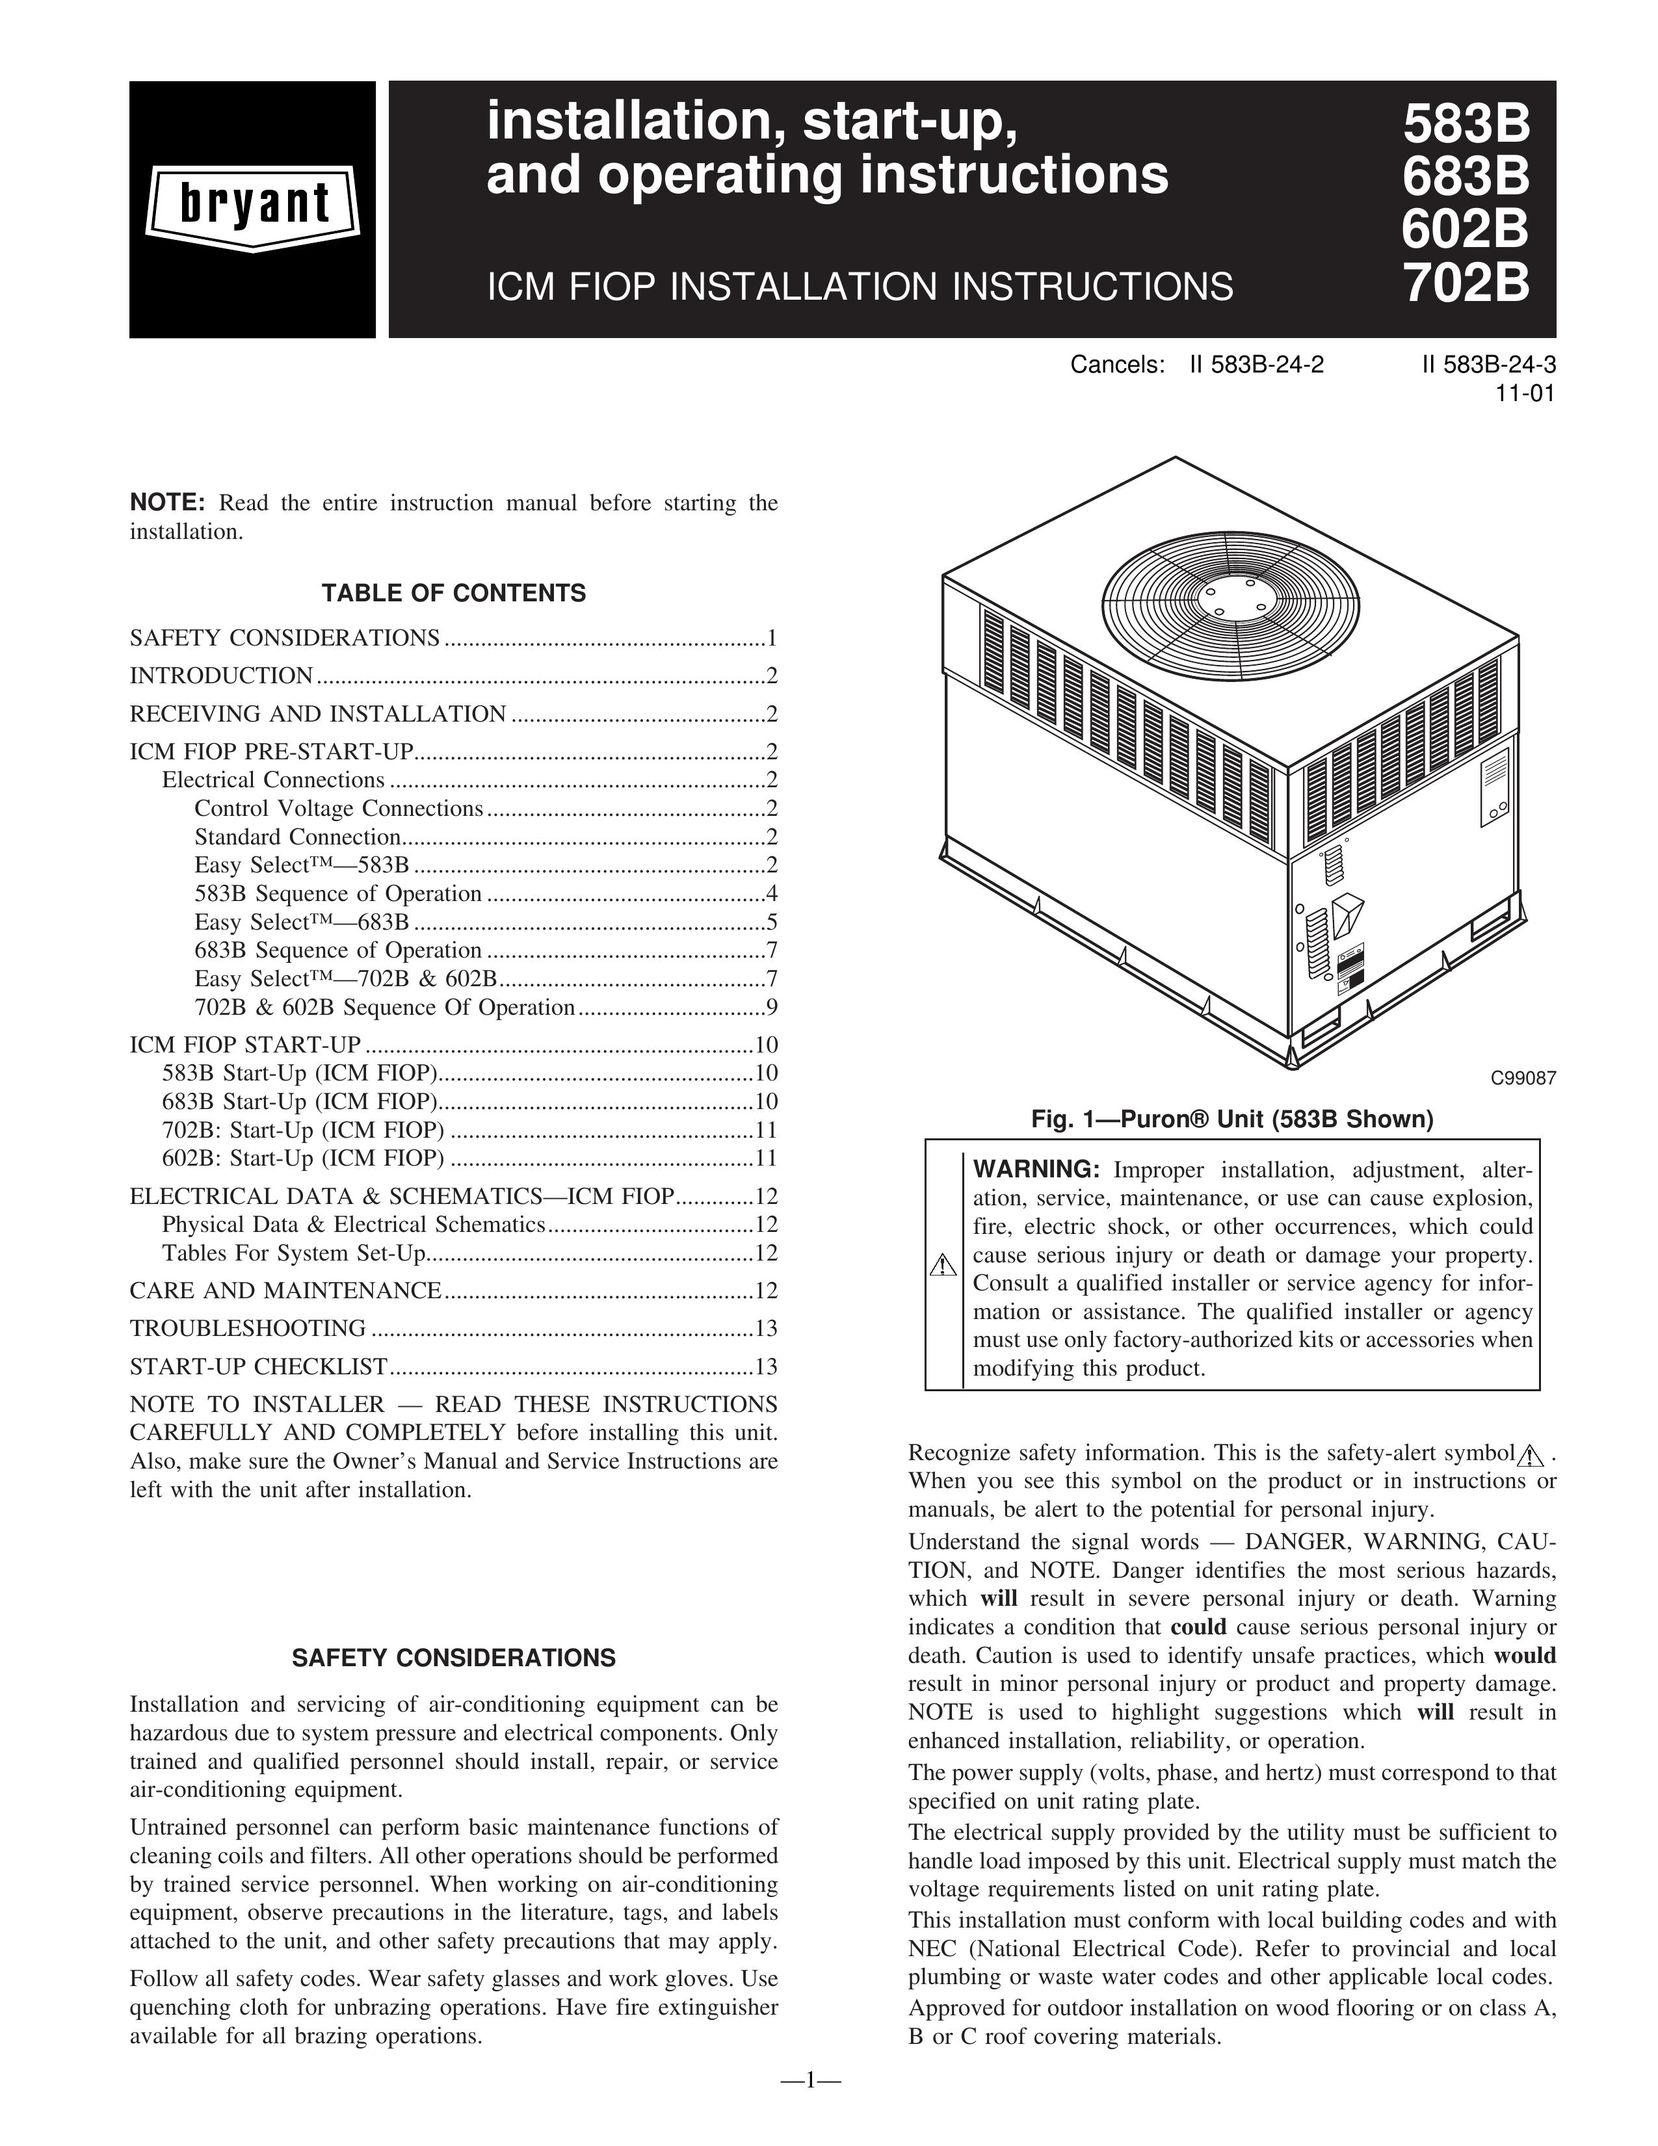 Bryant 583B Gas Heater User Manual